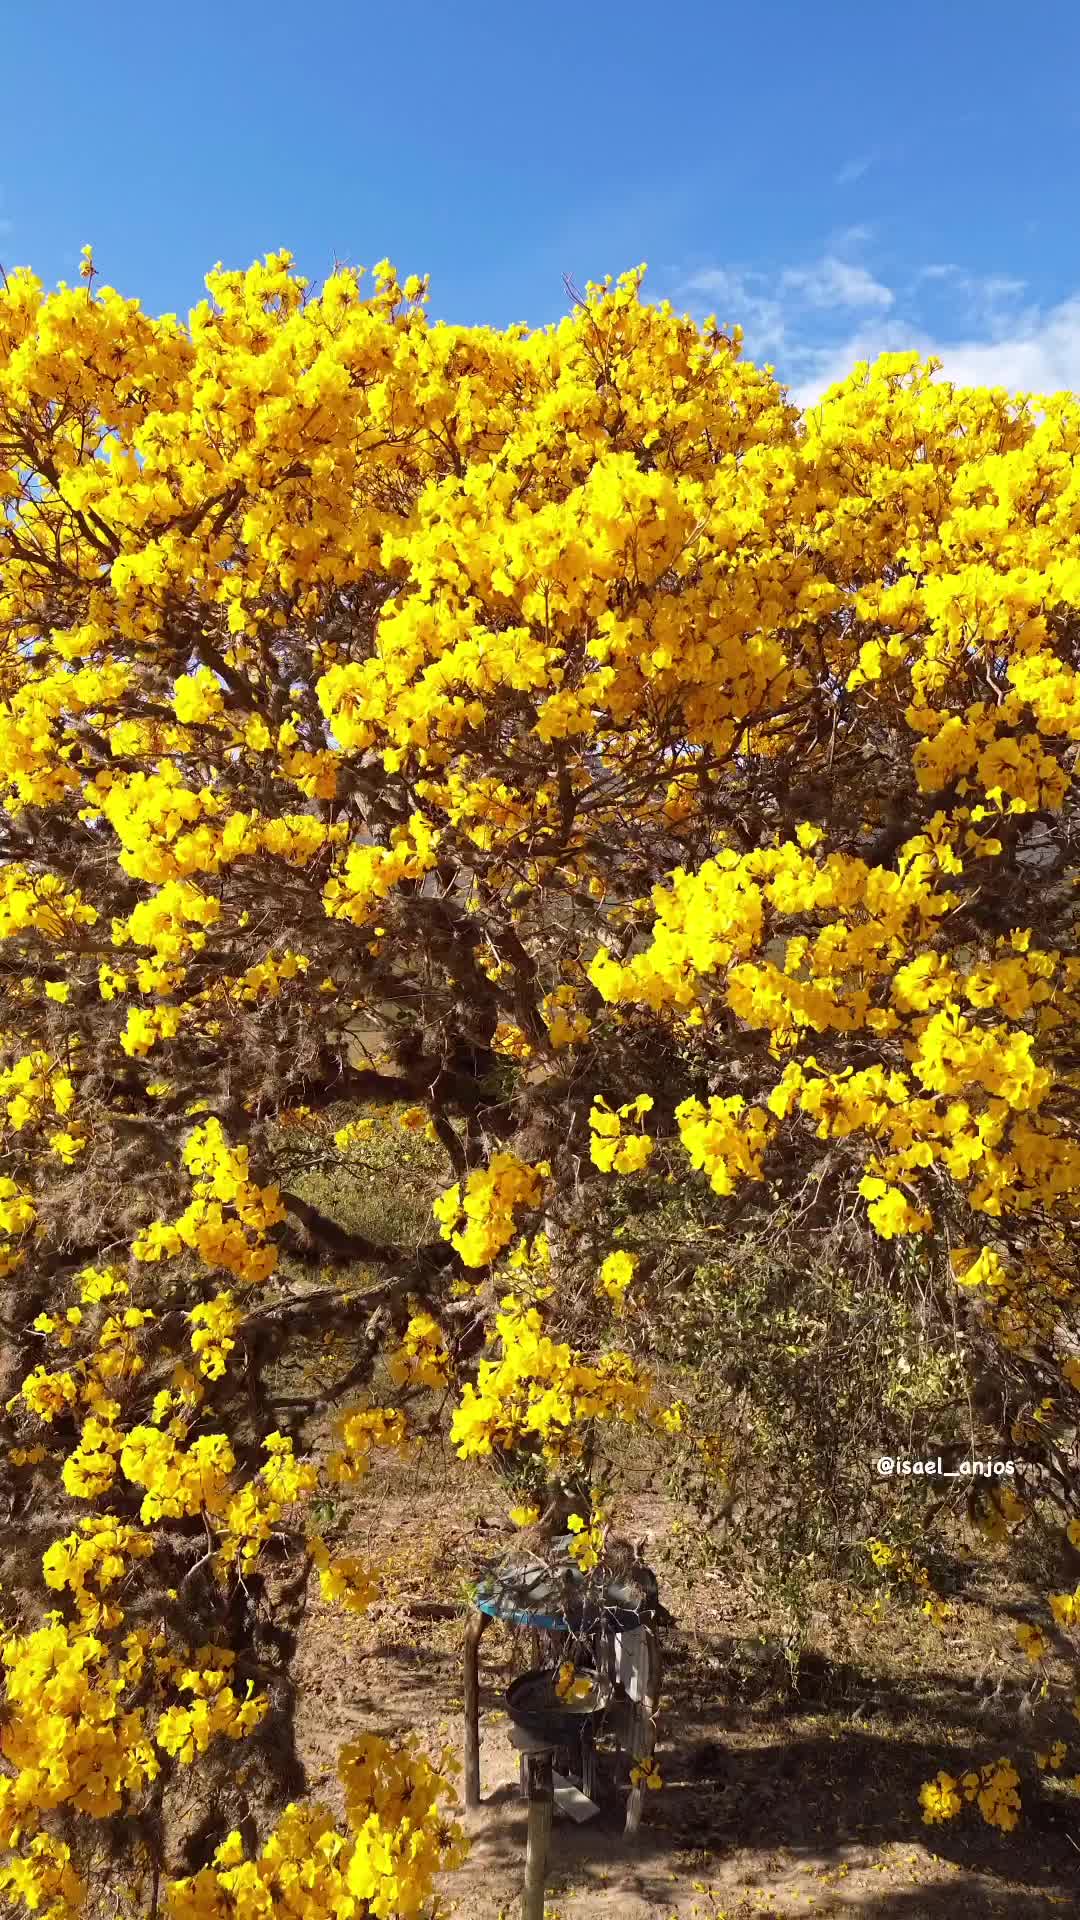 Ipê Amarelo: The Iconic Yellow Tree of Brazil